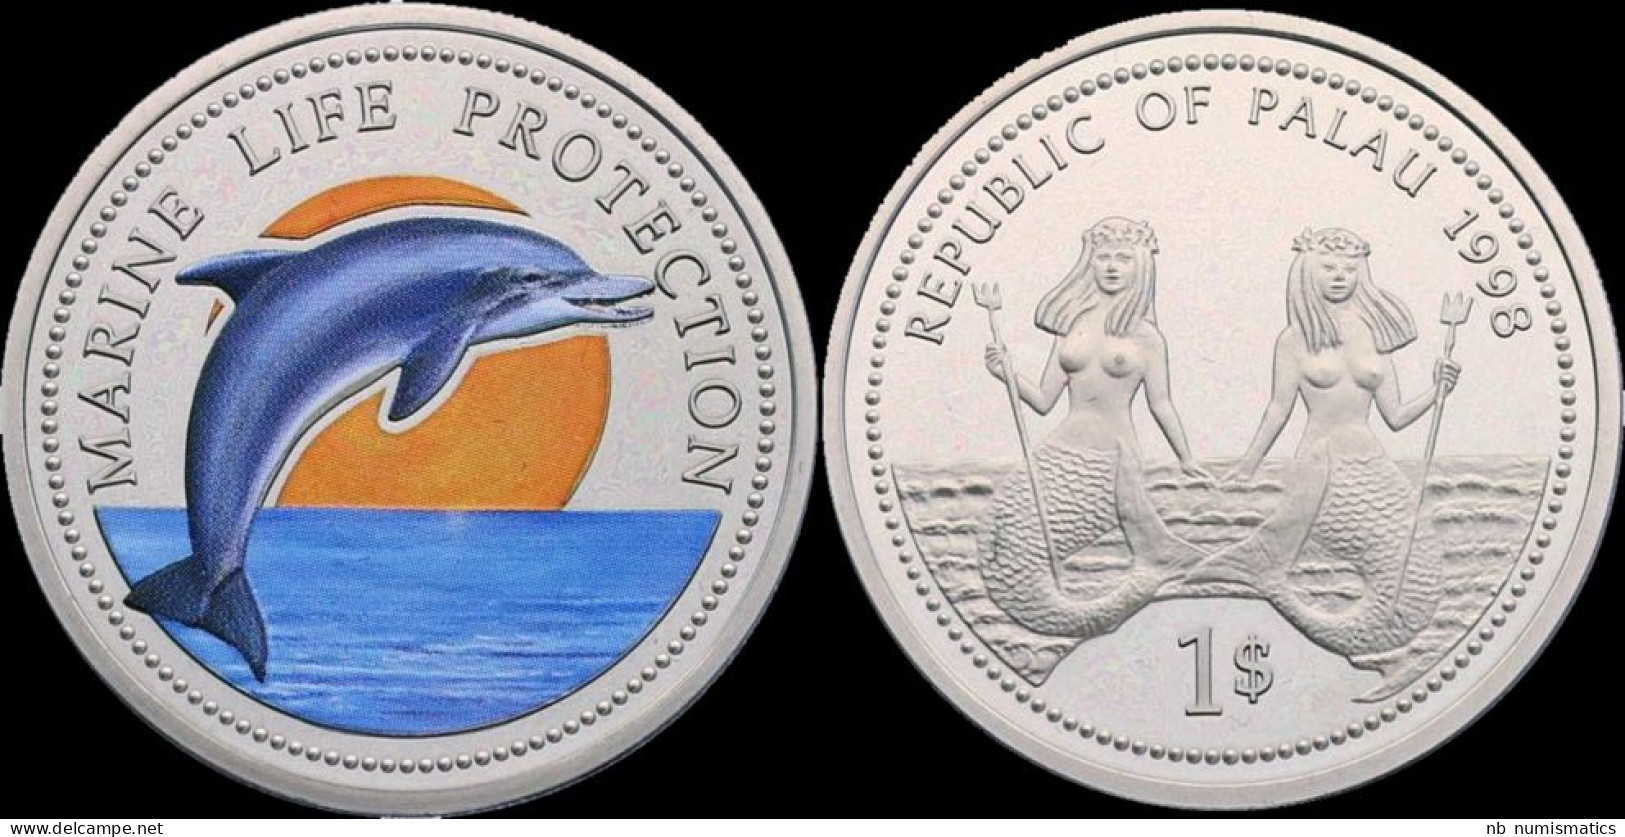 Palau Dollar 1998- Marine-life Protection Proof In Plastic Capsule - Palau